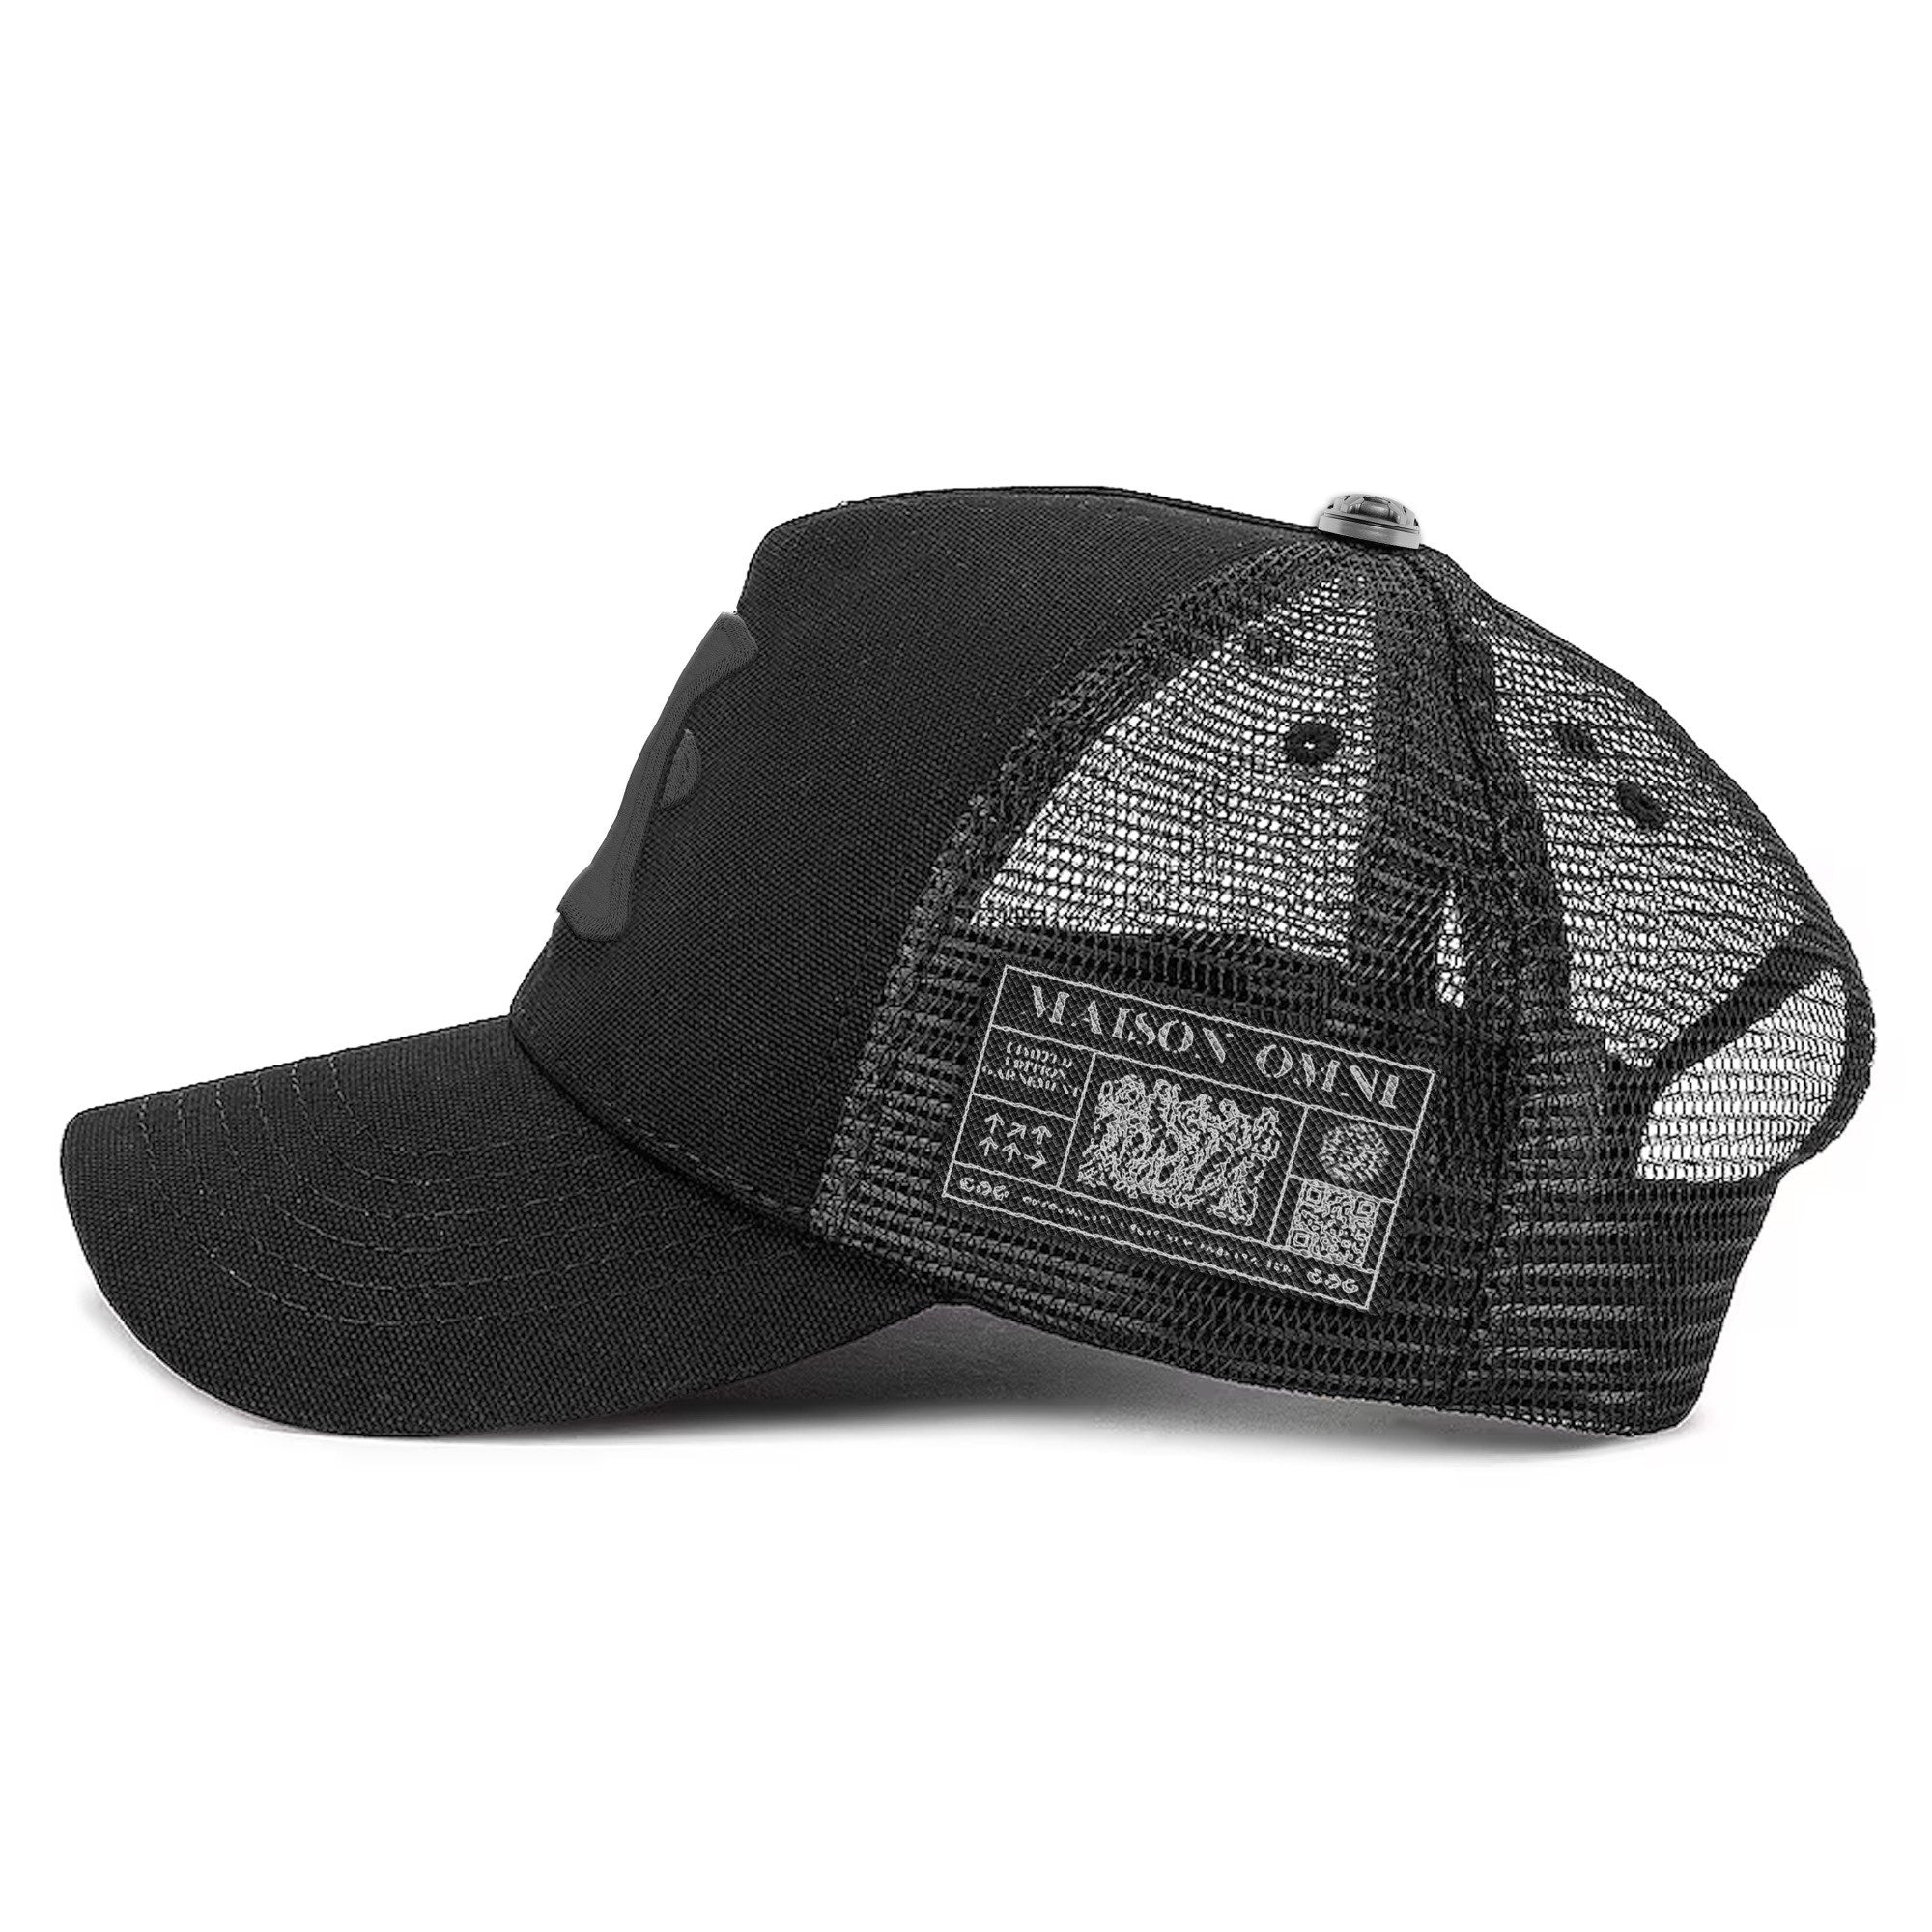 Maison omni trucker hat black